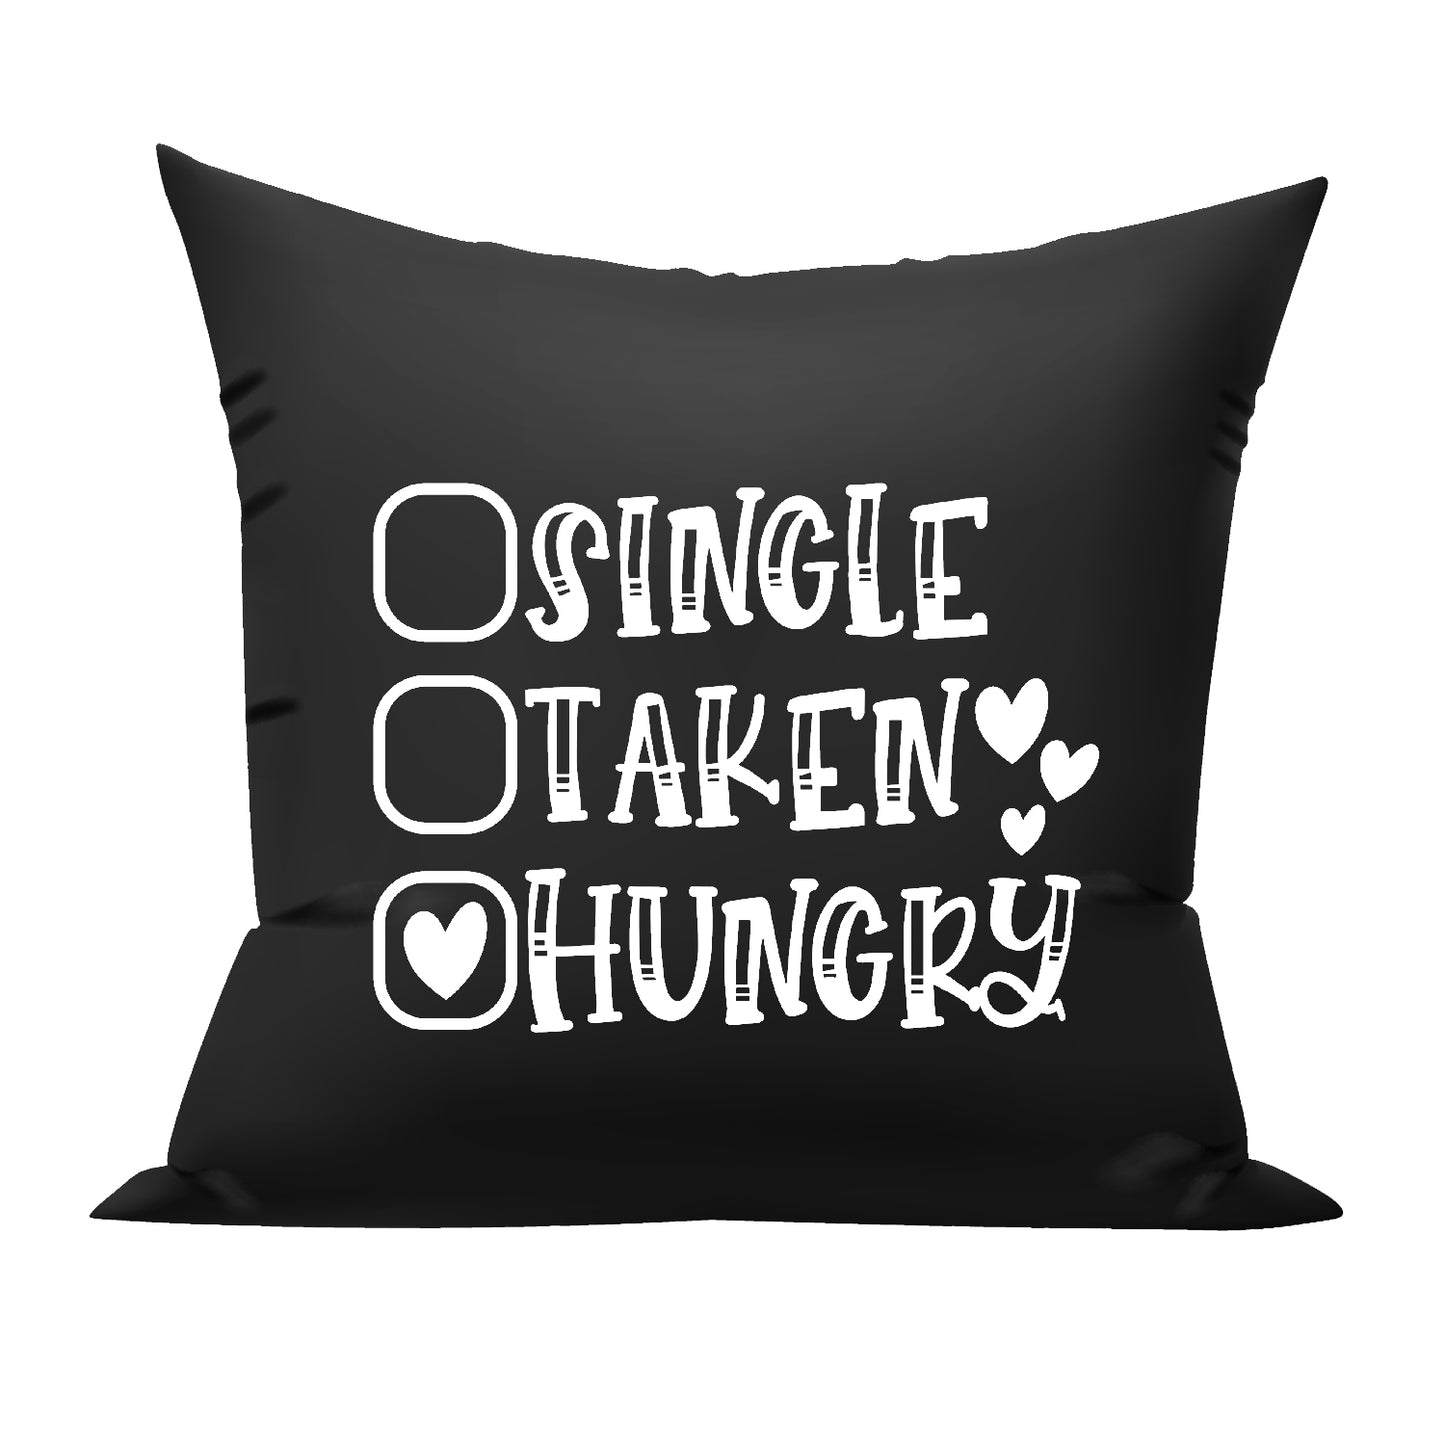 Single, Taken, Hungry cushion